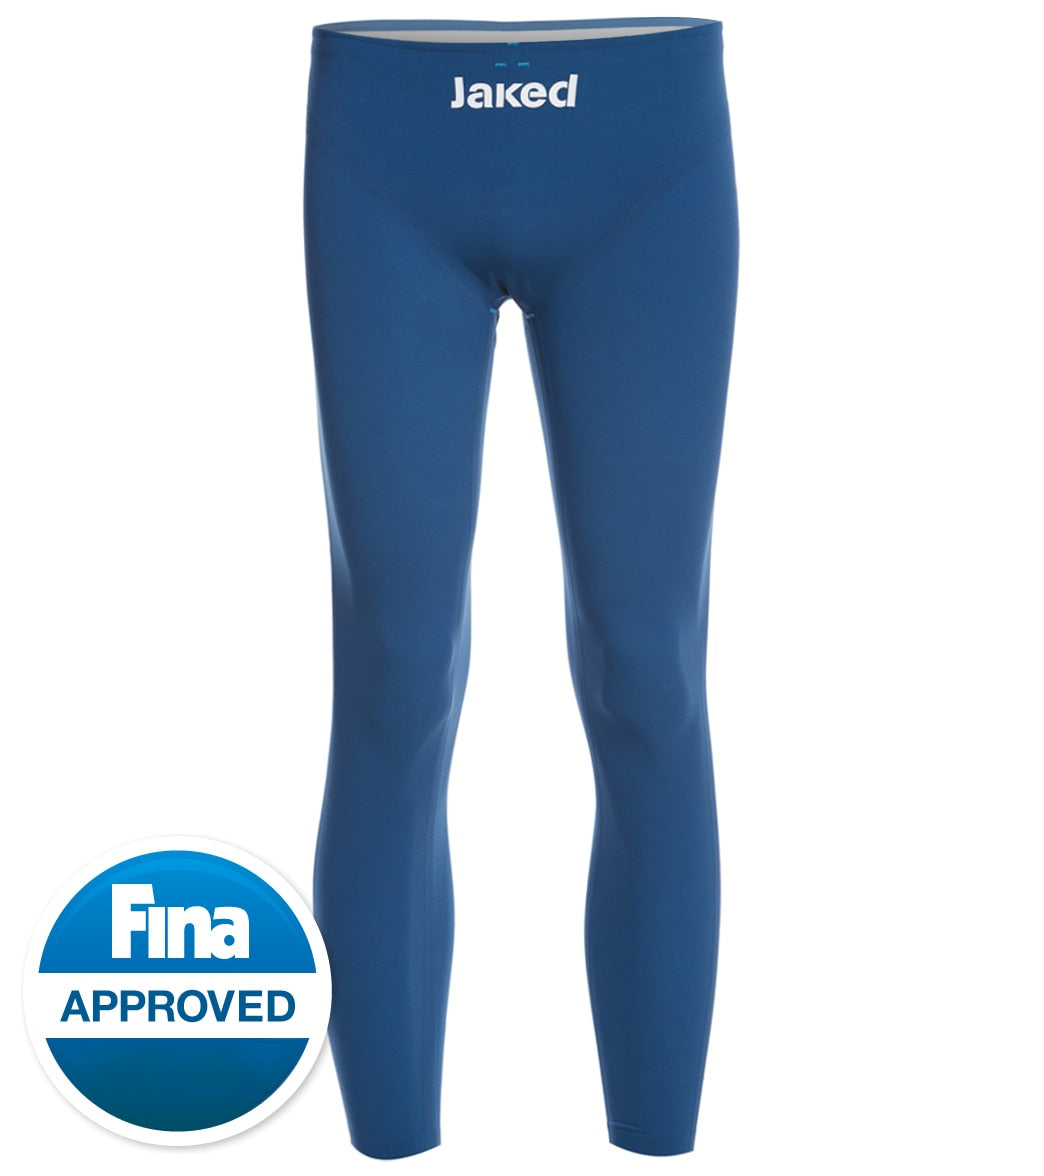 Jaked Men's Jkatana Full Pant Tech Suit Swimsuit at SwimOutlet.com